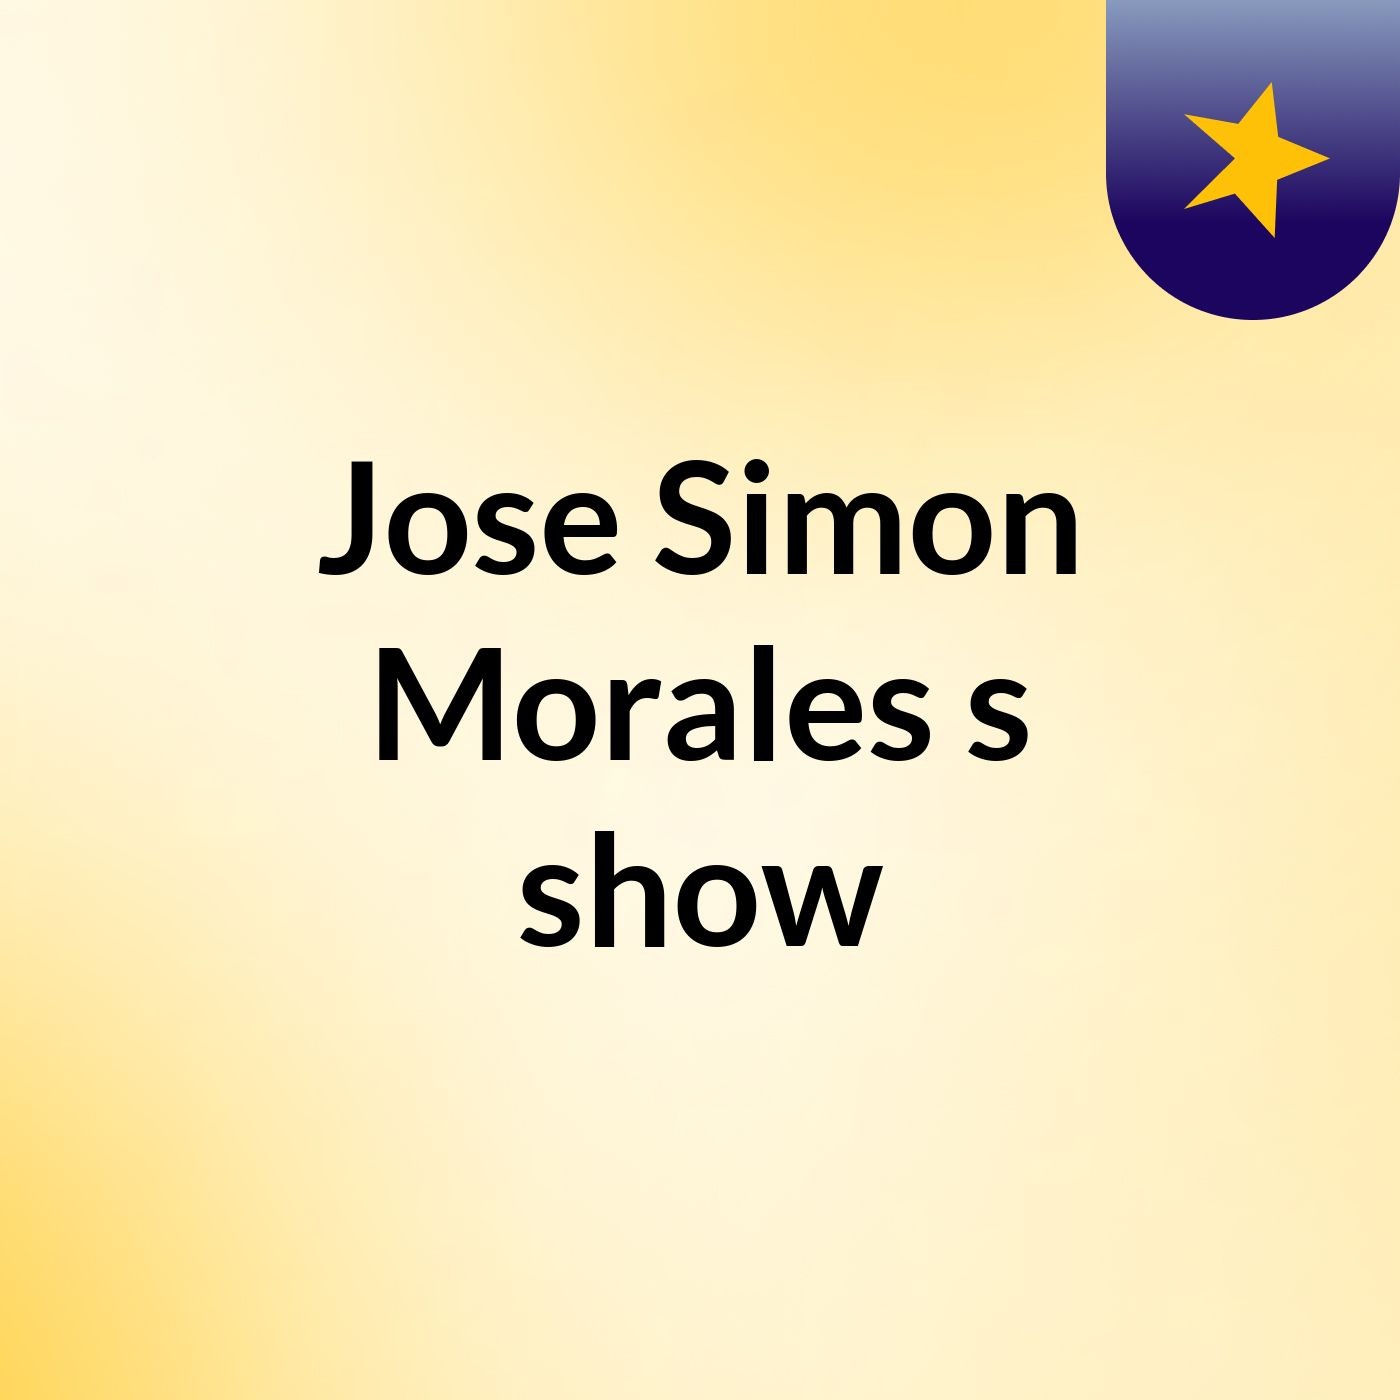 Jose Simon Morales's show